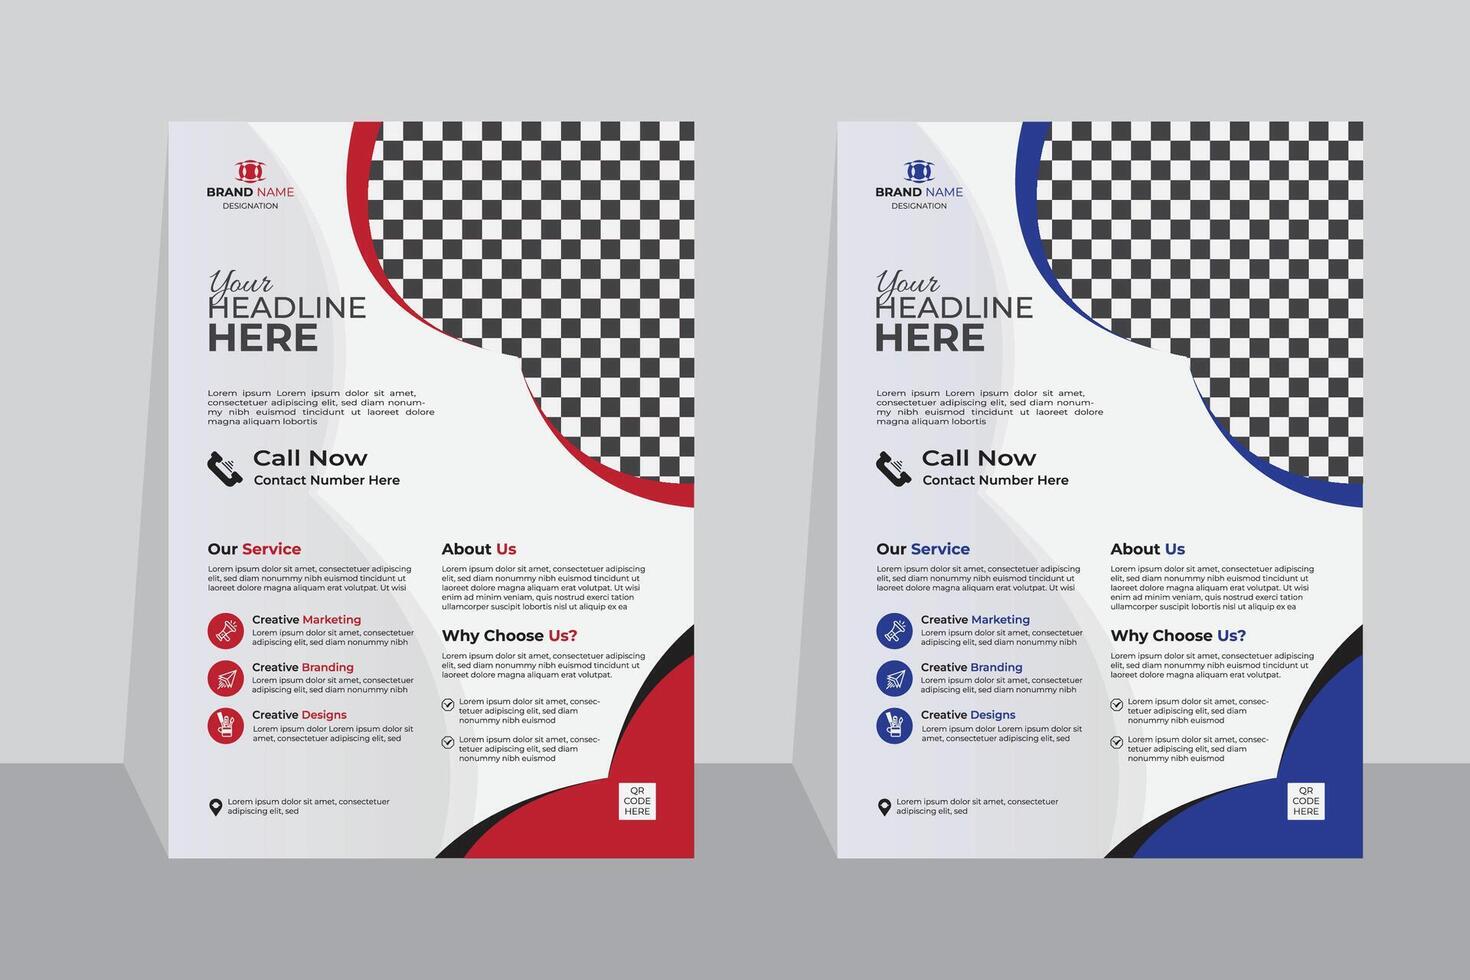 póster volantes folleto folleto cubrir diseño diseño espacio para foto fondo, bueno Acercarse a marketing, vector ilustración modelo en a4 tamaño.